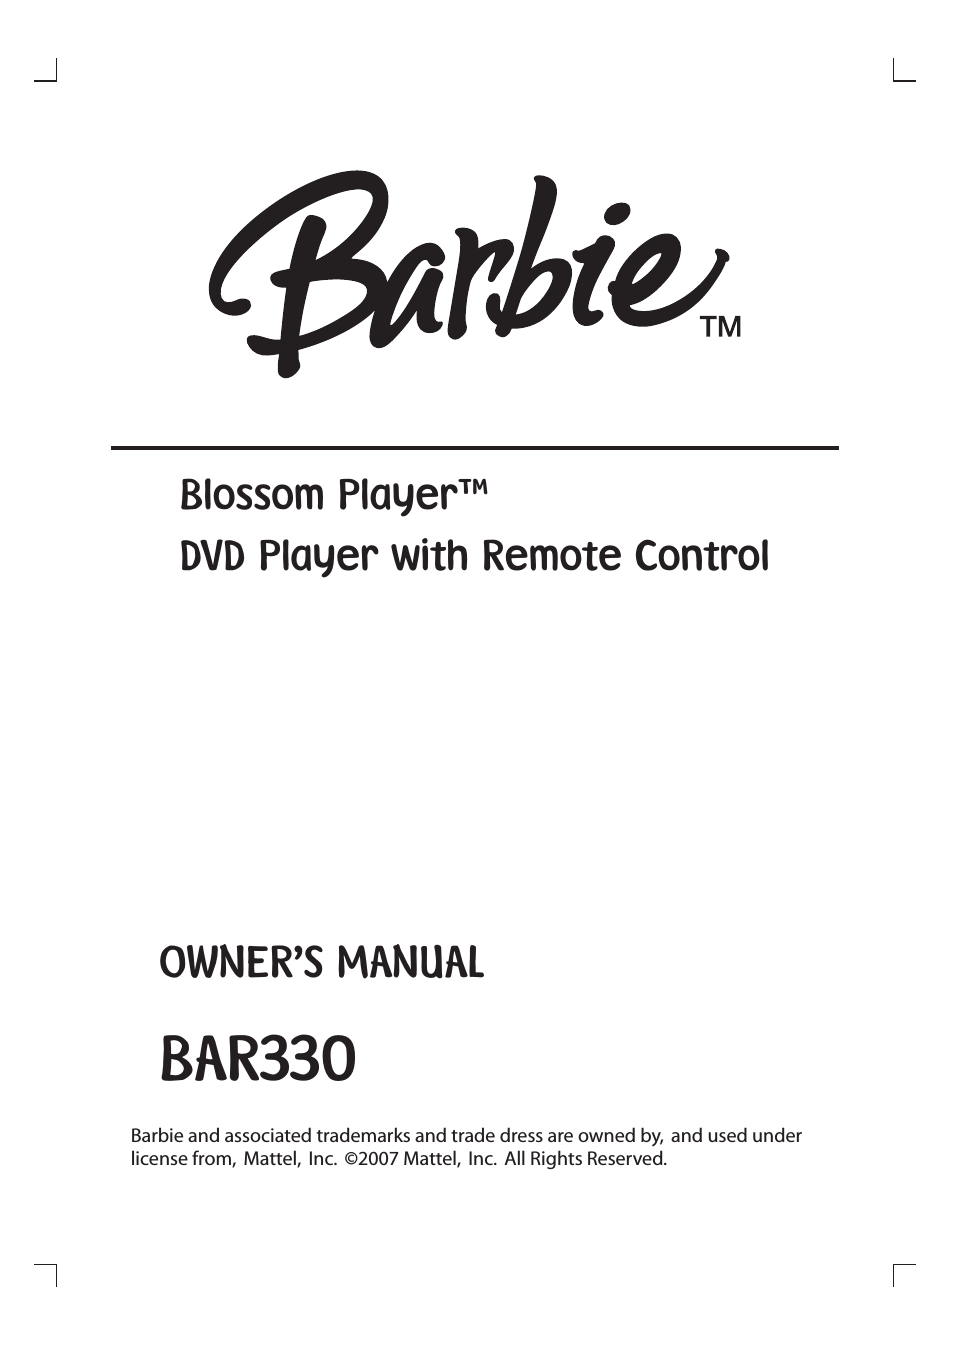 BAR330 Revised 02/02/2007 - Part 1